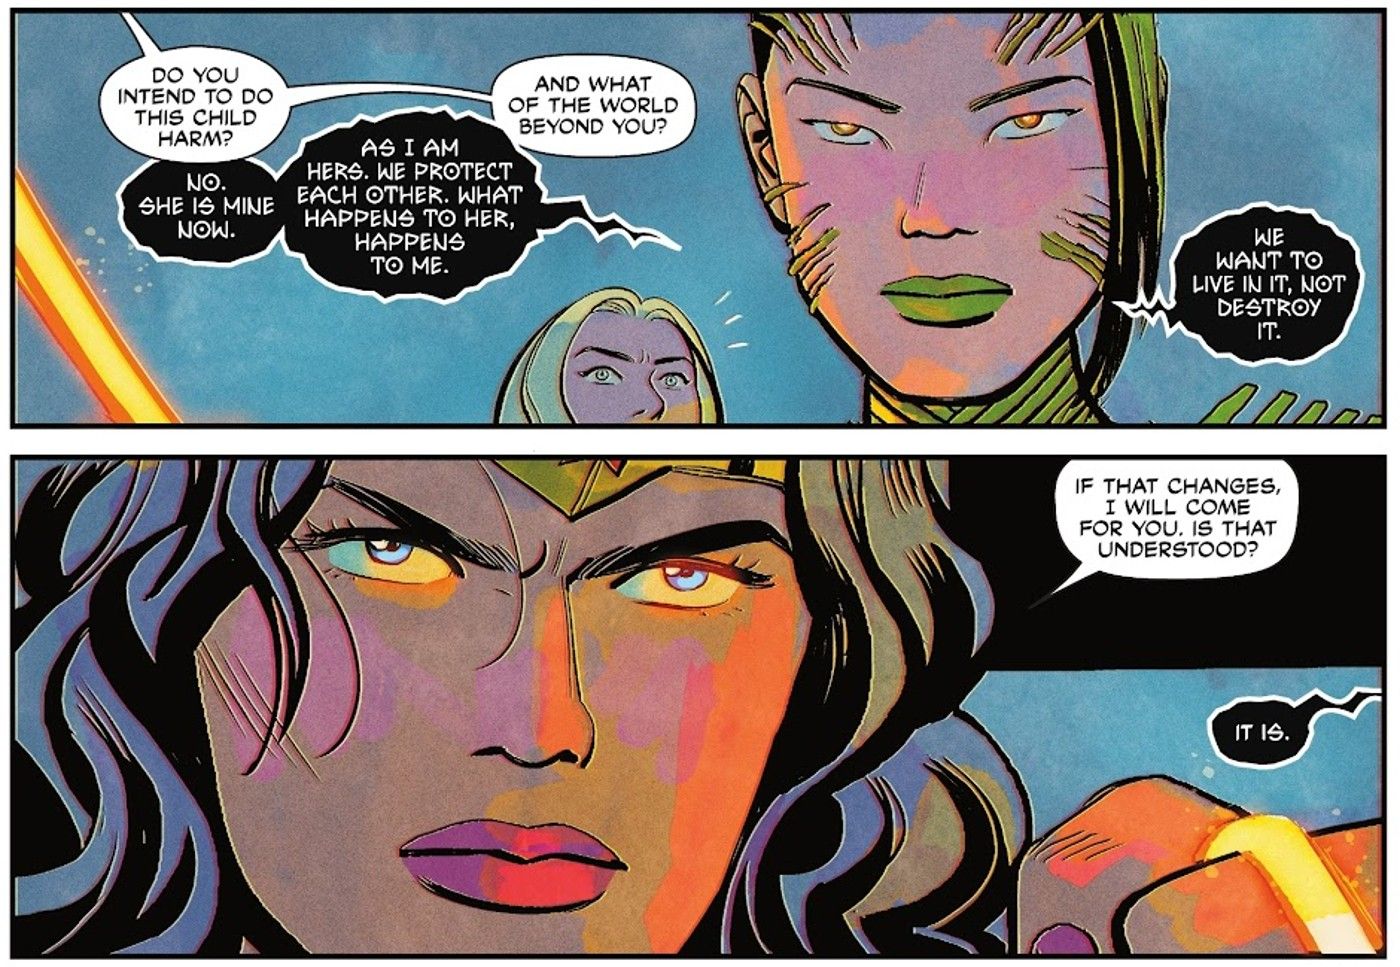 Comic book panels: Wonder Woman Threatens Megaera